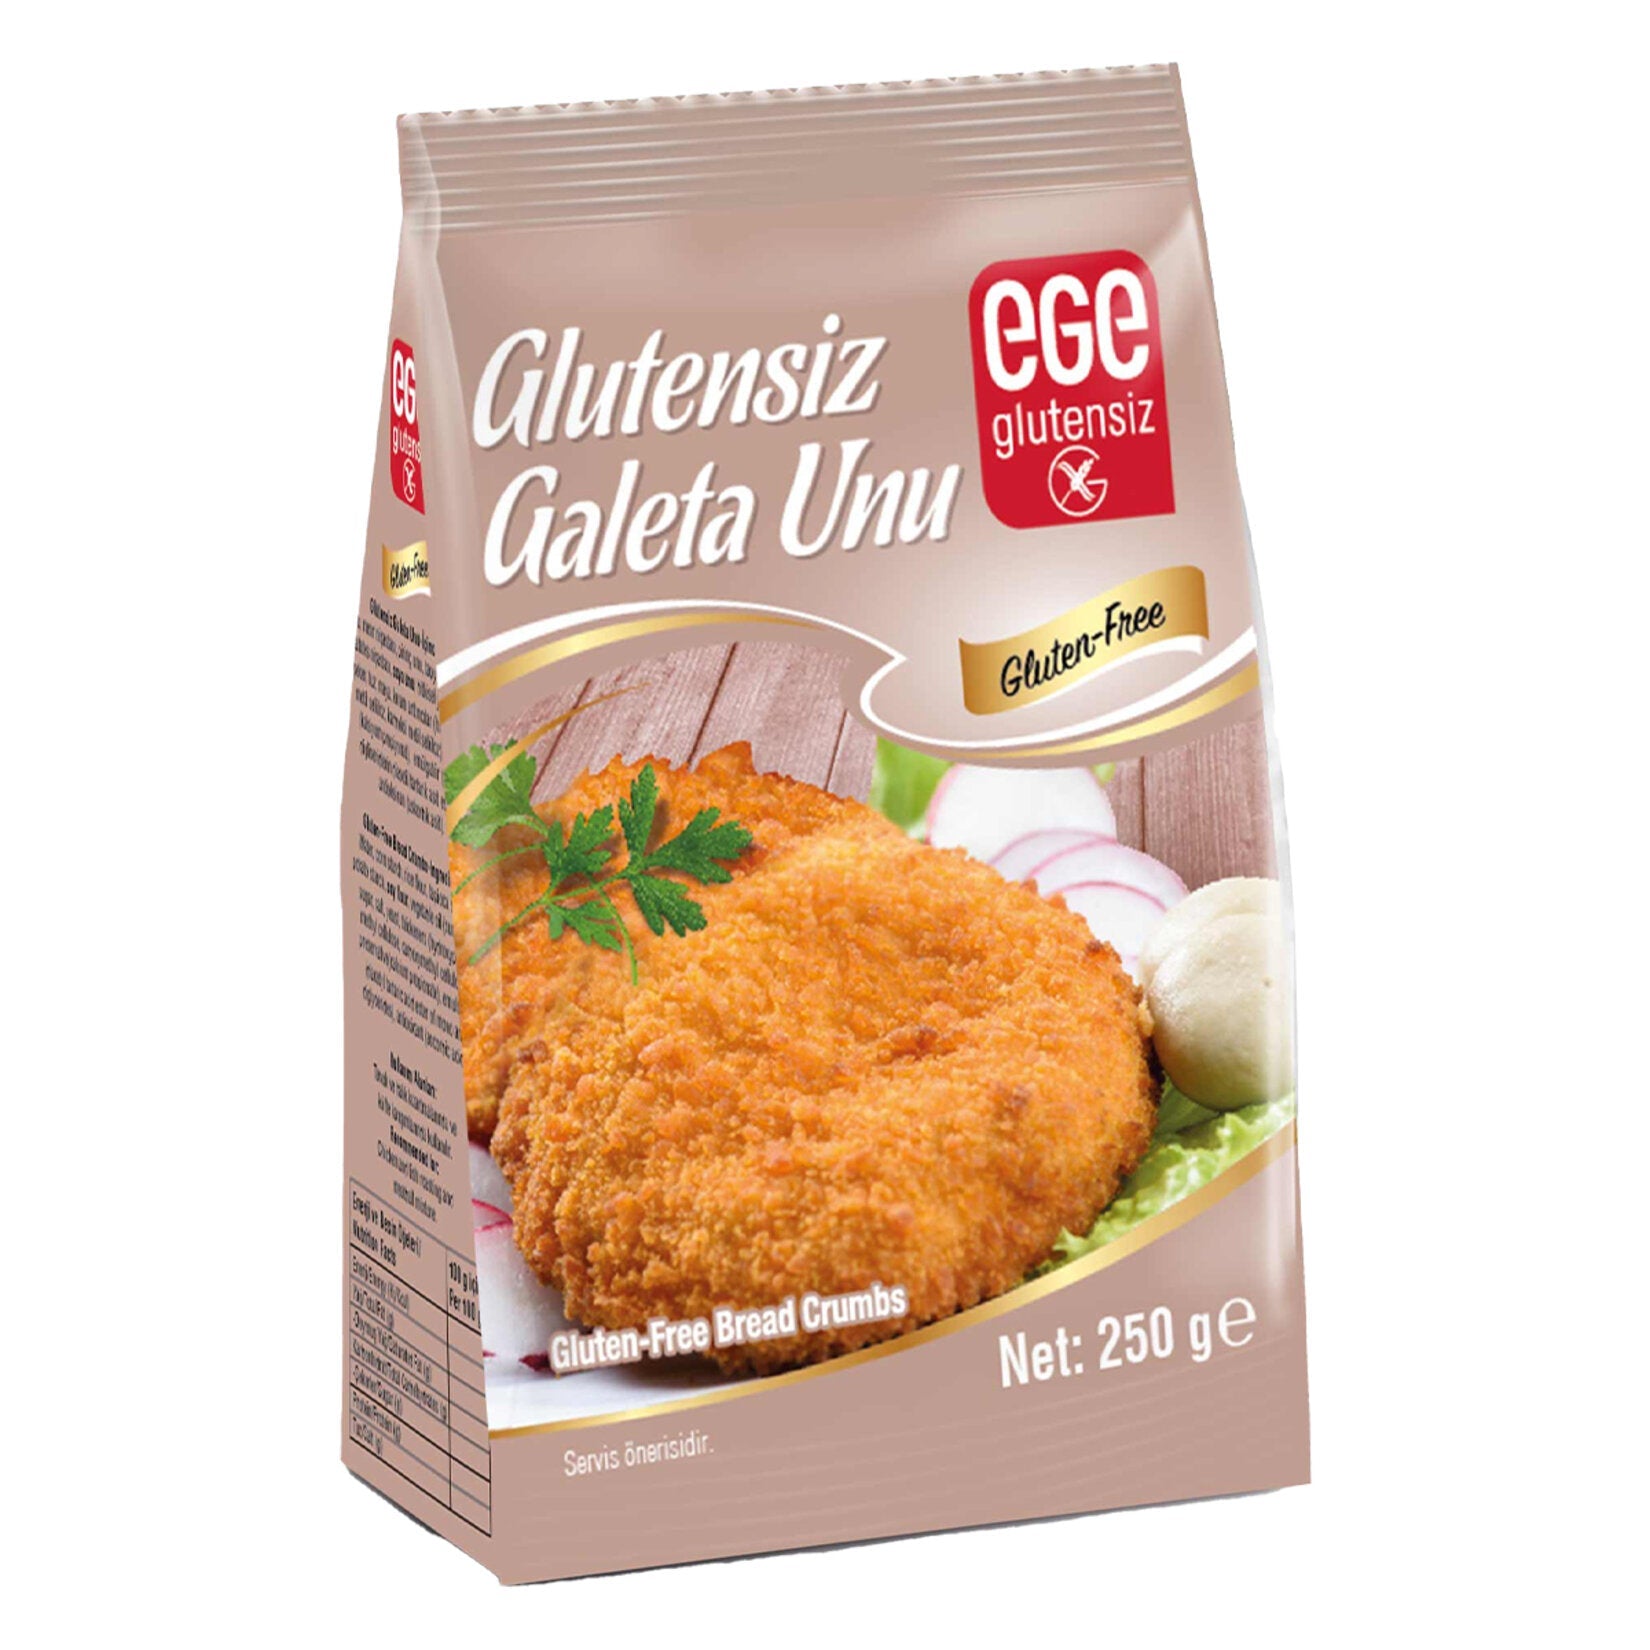 Ege Glutensiz Gluten Free Breadcrumbs 250g